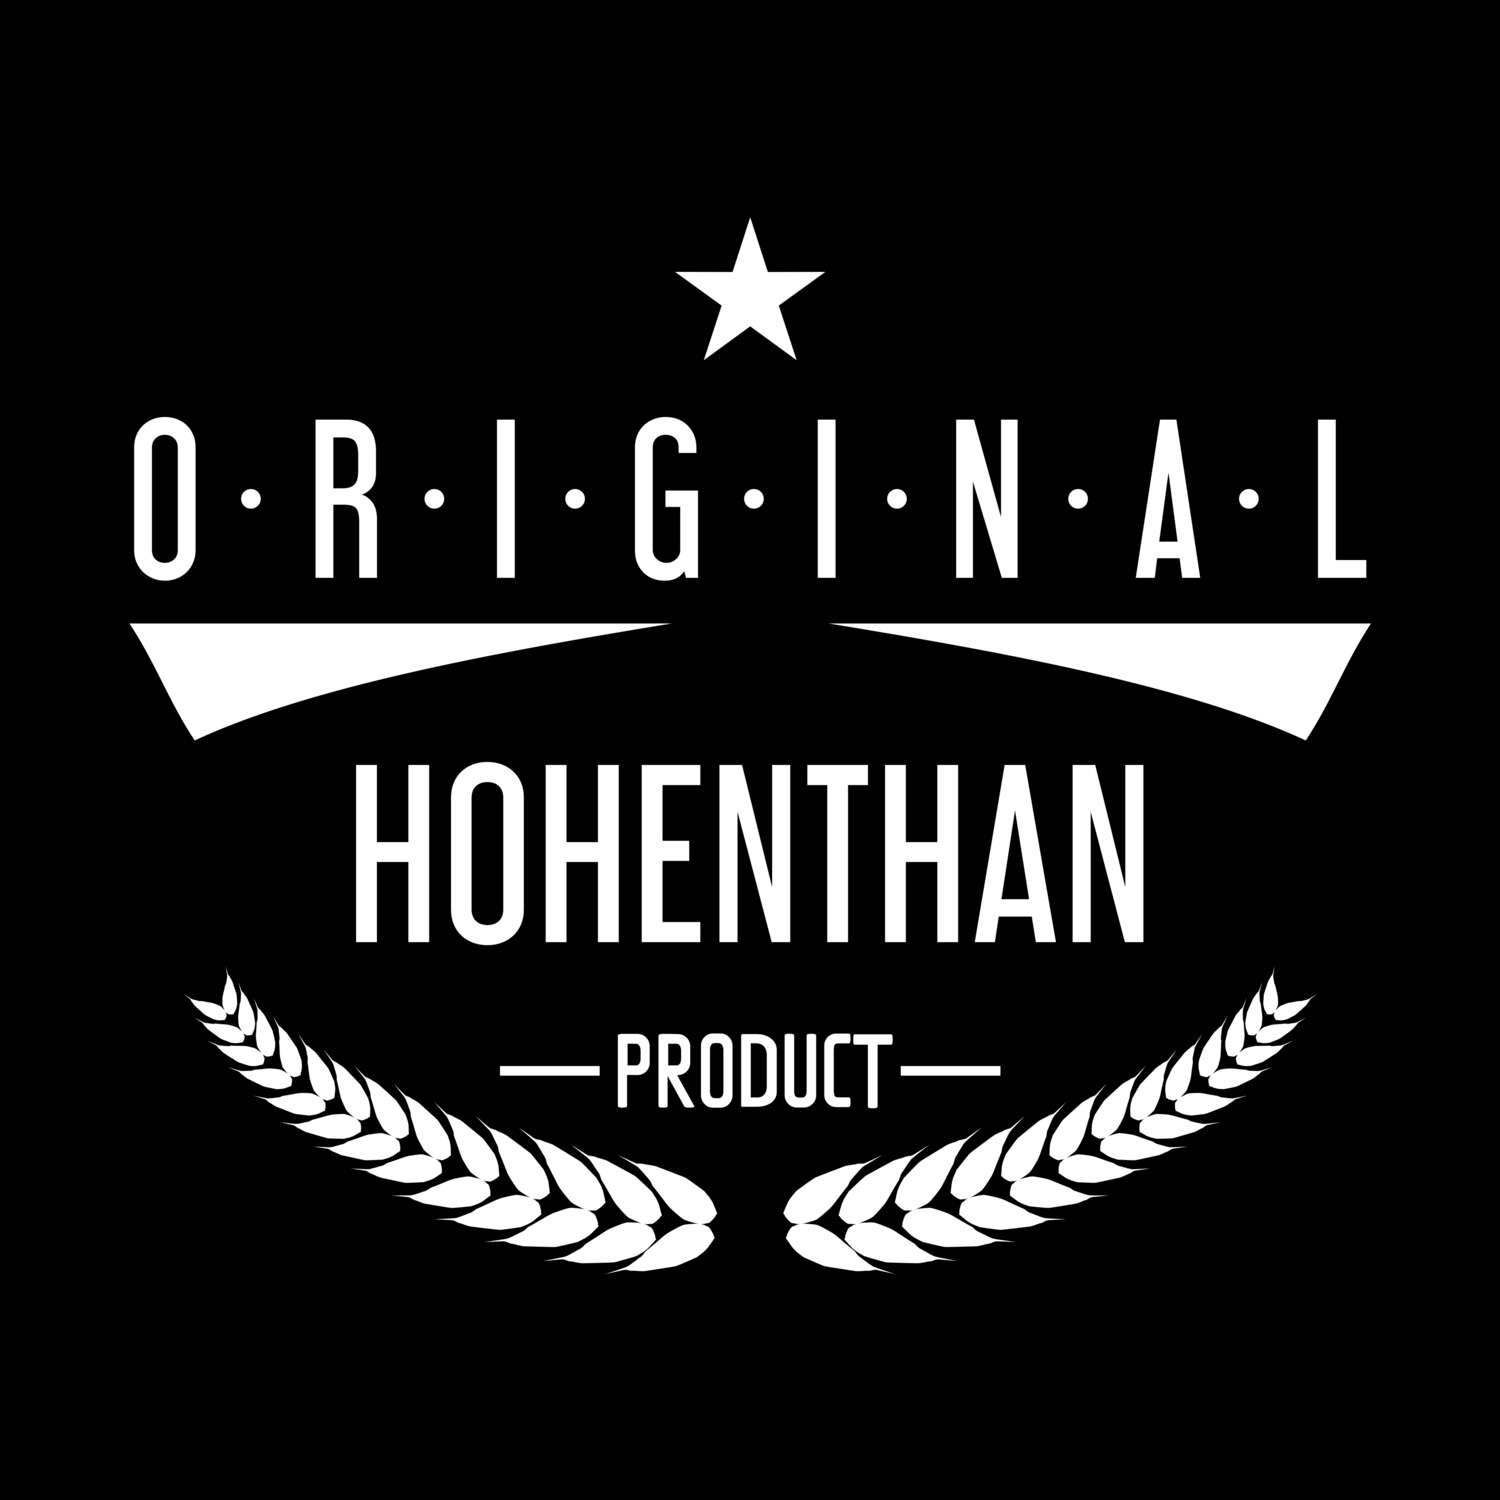 Hohenthan T-Shirt »Original Product«